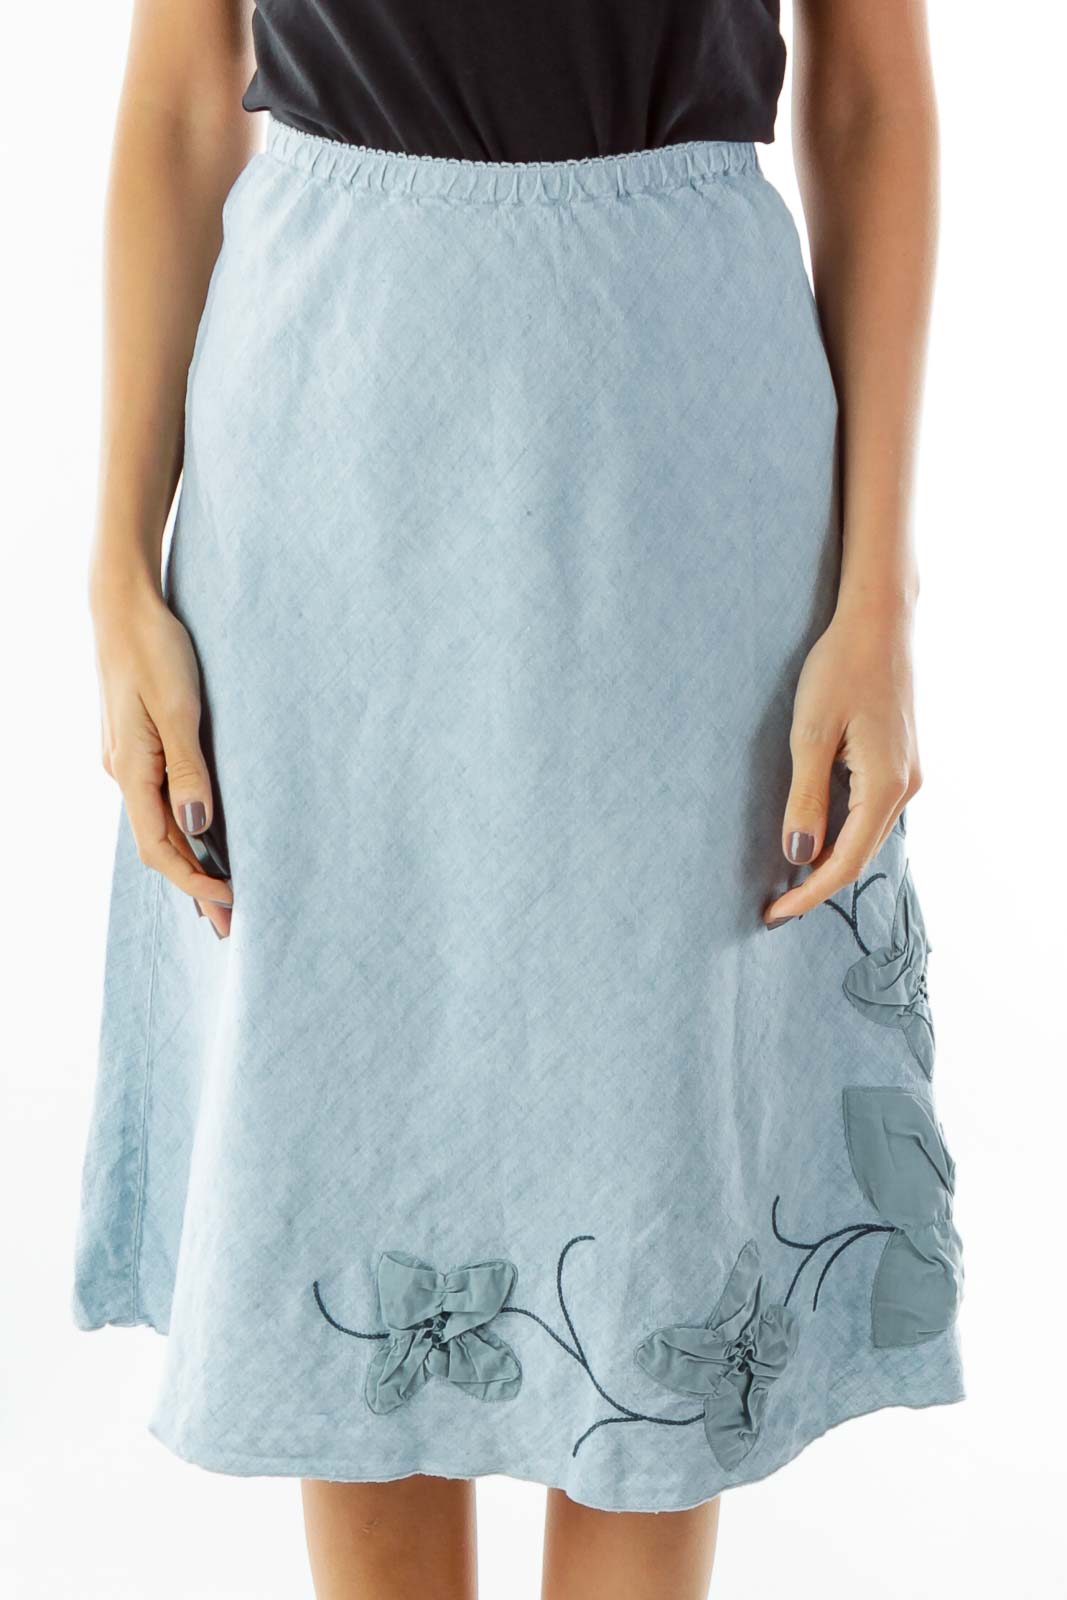 Blue Flower Embroidered Linen Petite Skirt Front